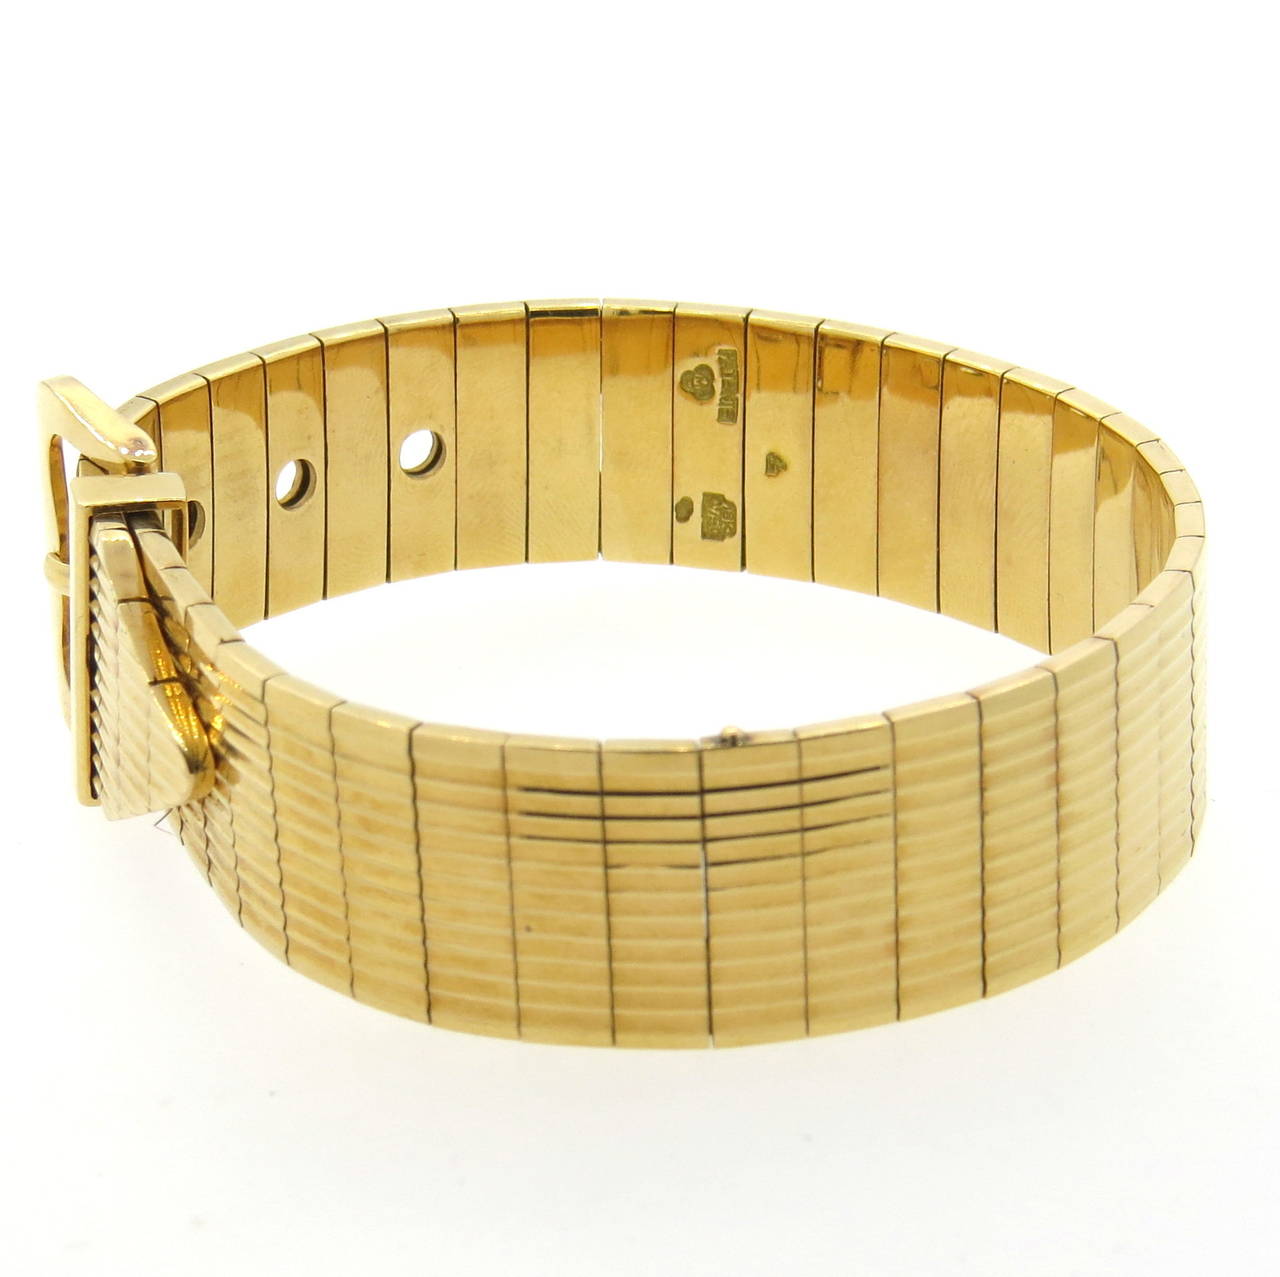 An 18k yellow gold buckle bracelet.  The bracelet measures 9